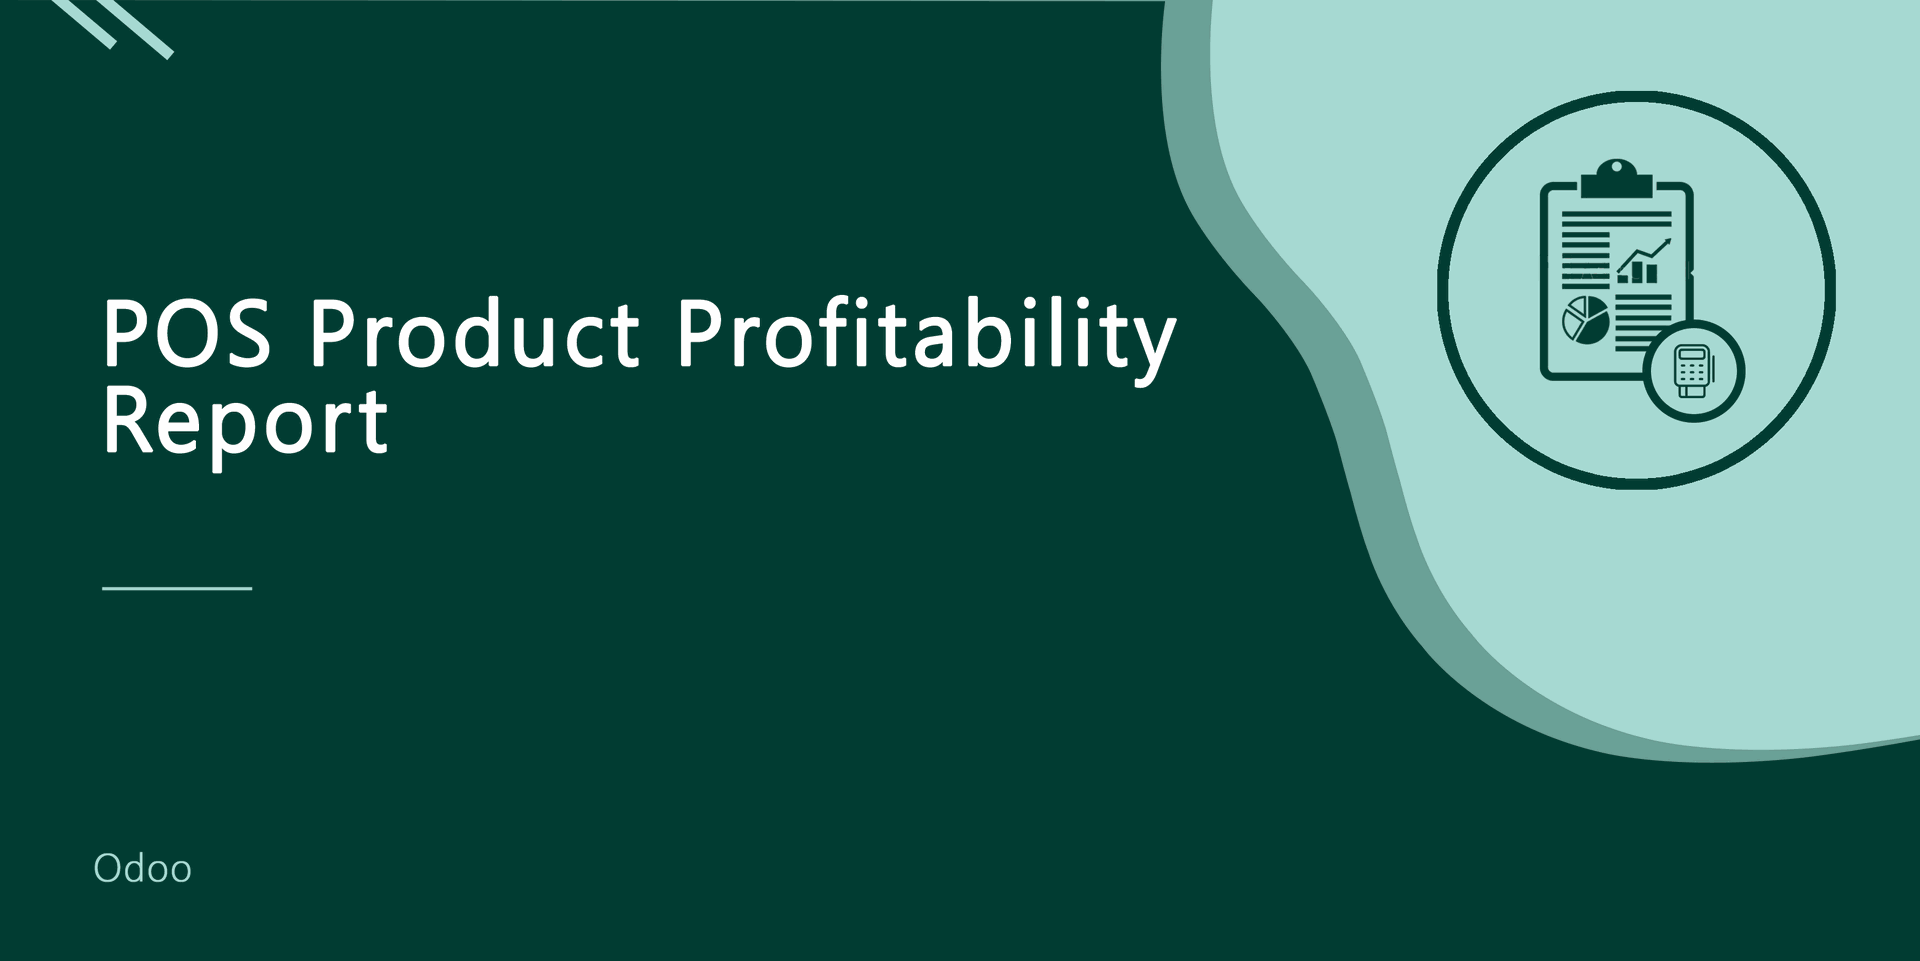 POS Product Profitability Report